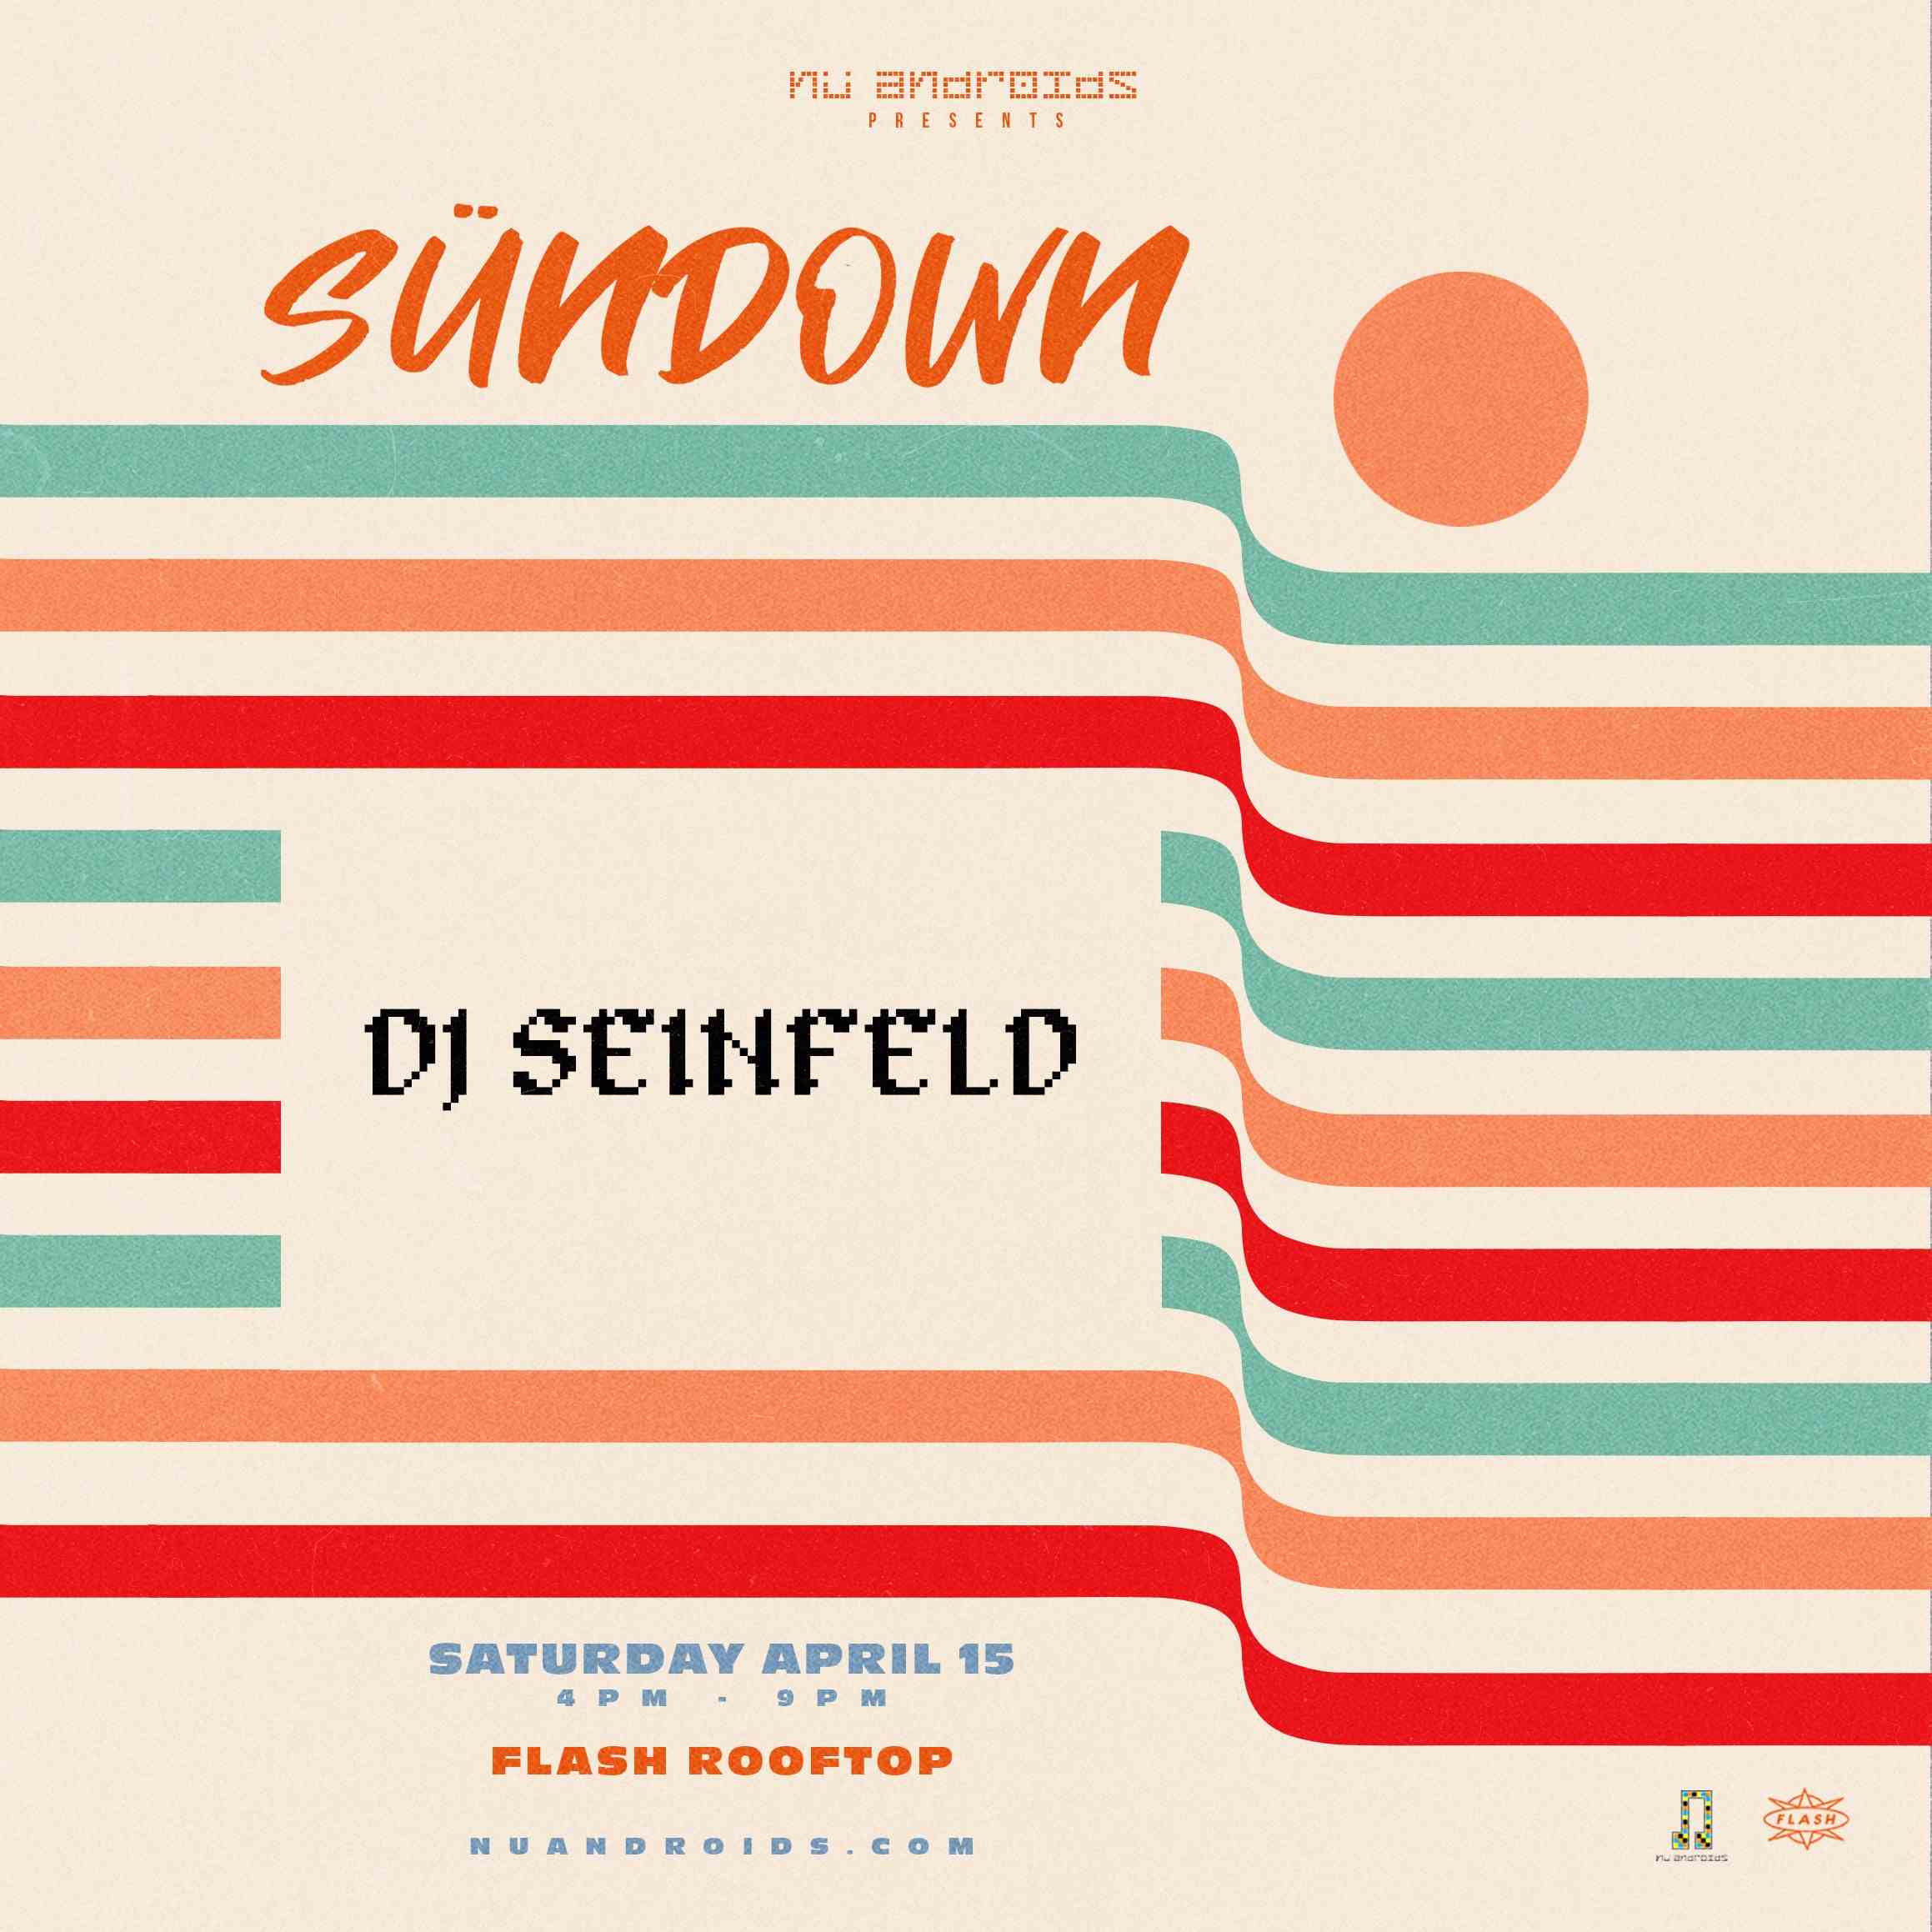 Nü Androids Presents SünDown: DJ Seinfeld (21+) event flyer